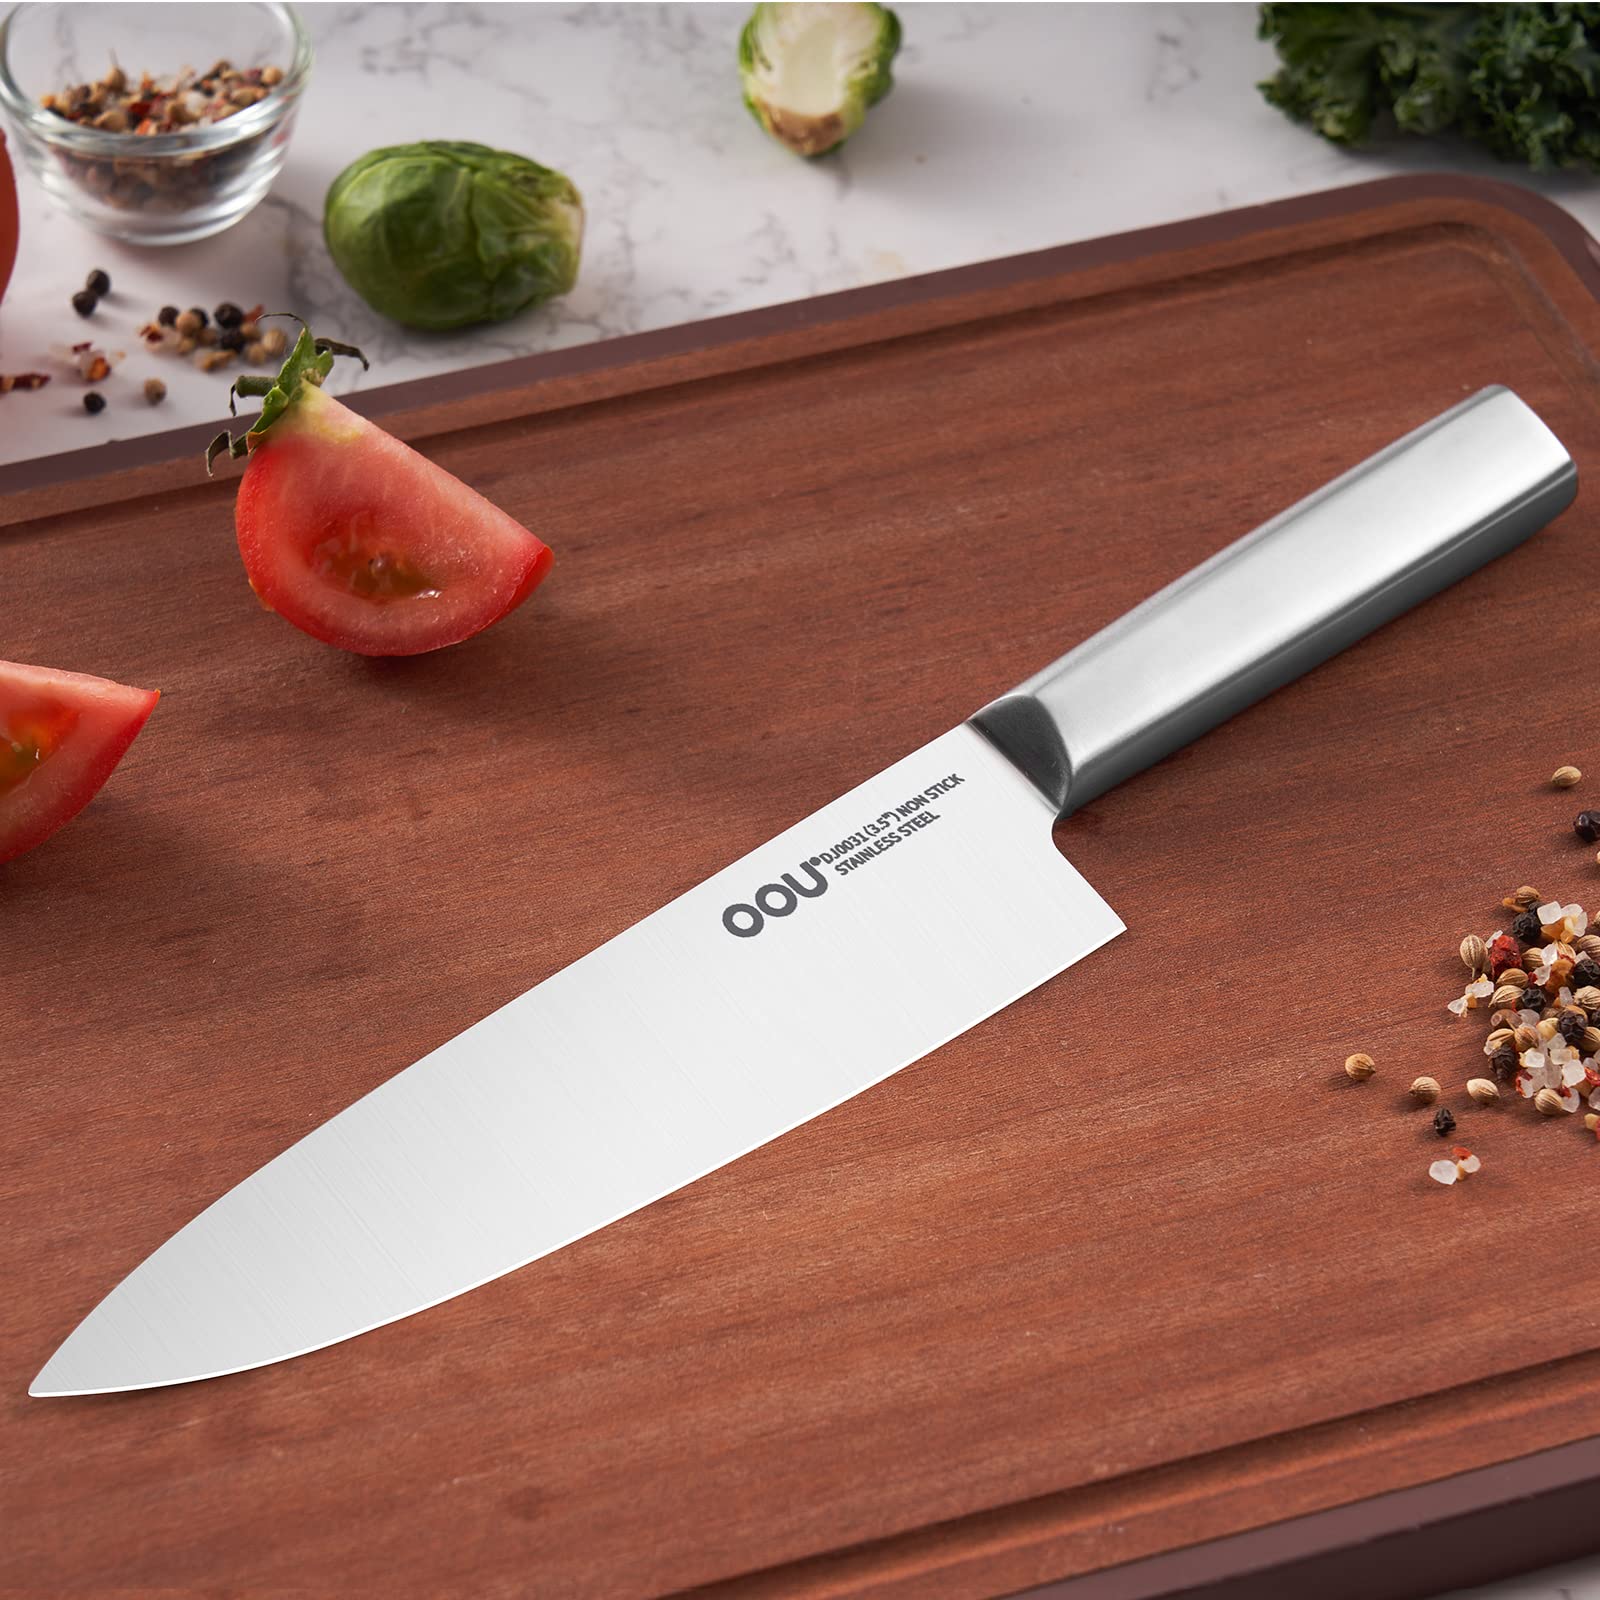 OOU Black Blade 15 Piece Kitchen Knife Set